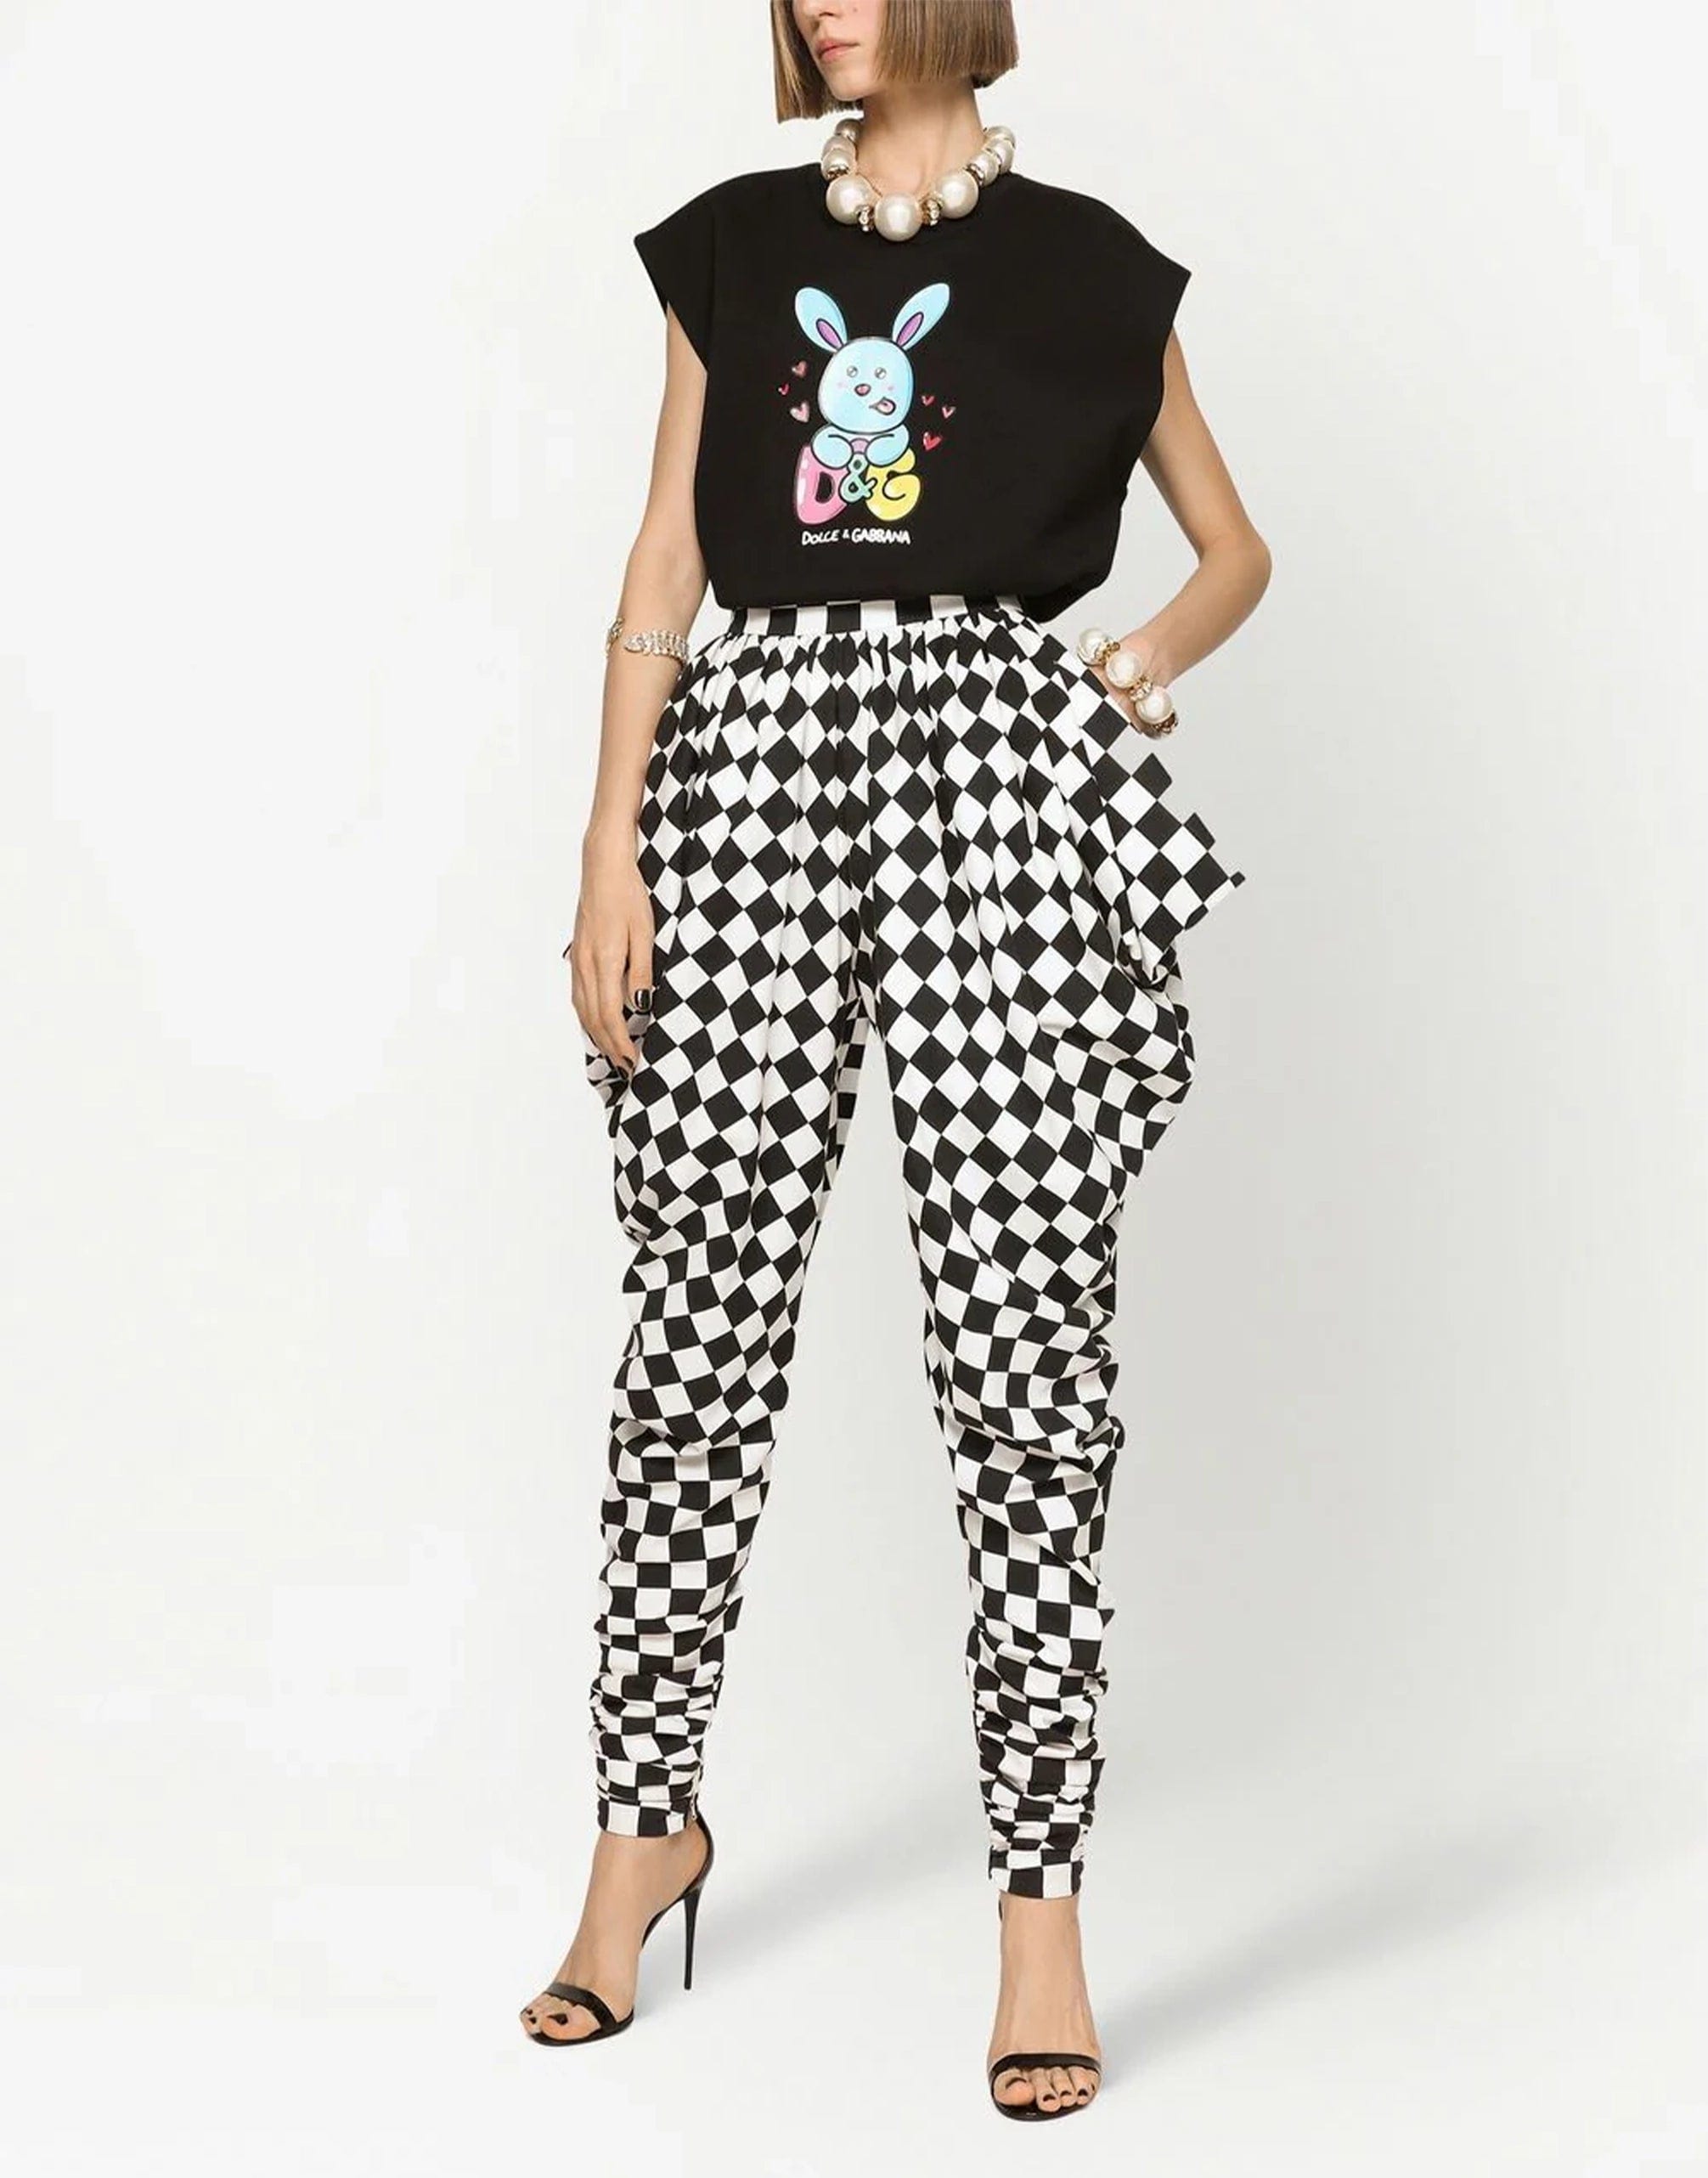 Dolce & Gabbana Bunny DG Print T-Shirt